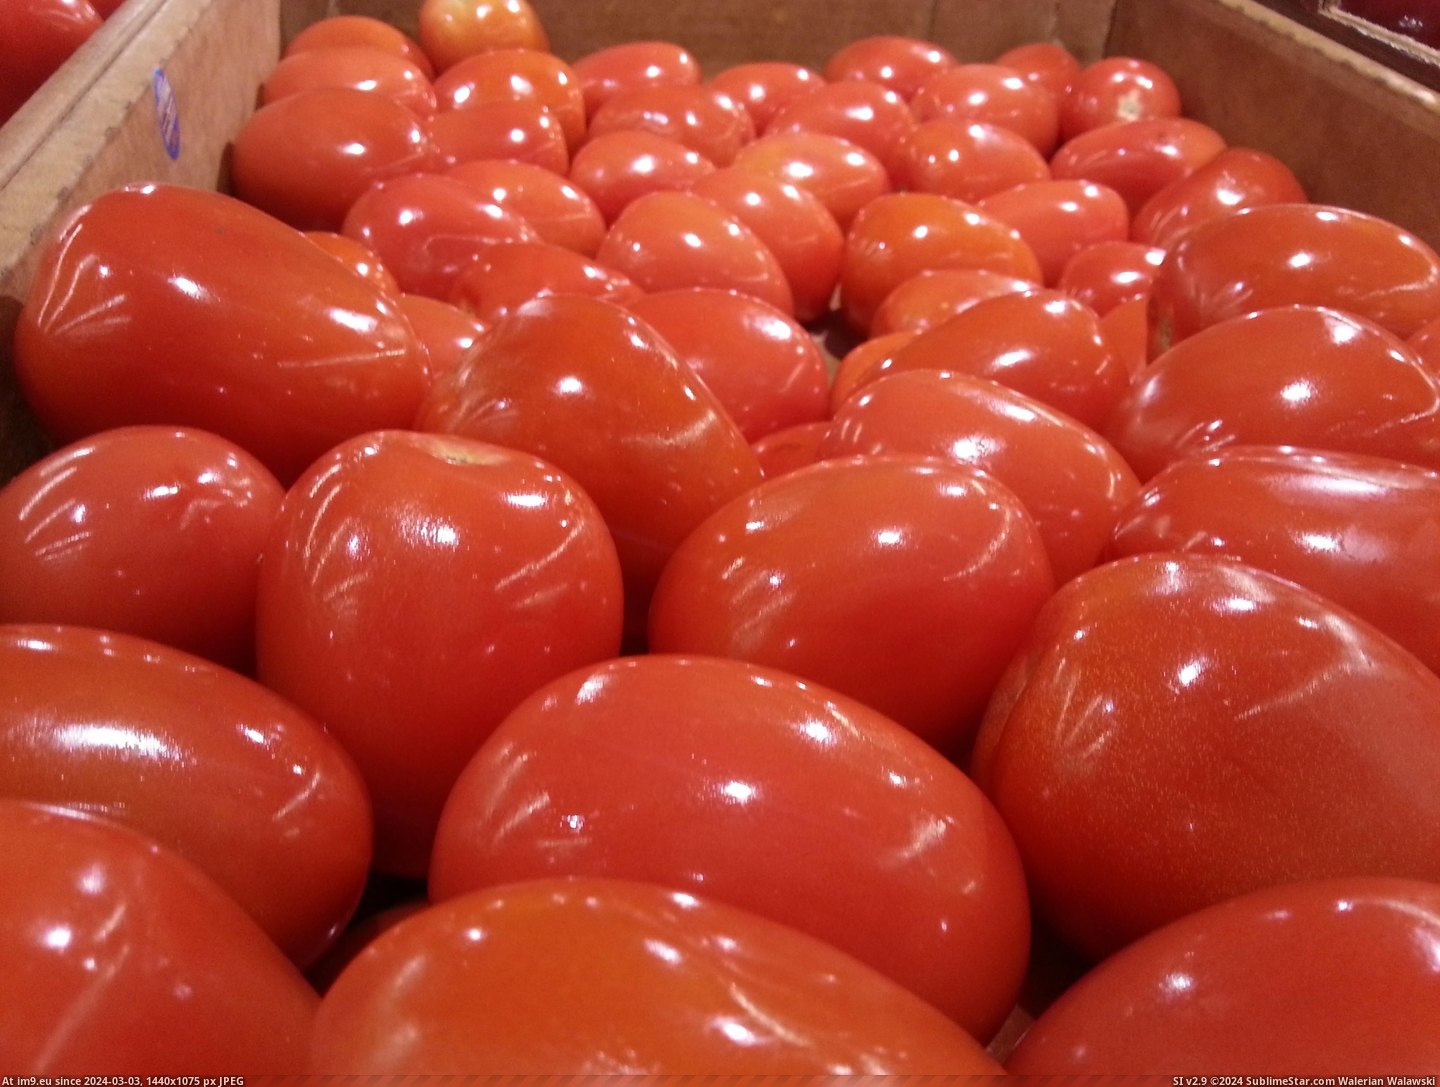 #Are #Tomatoes #Shiny [Mildlyinteresting] The tomatoes are especially shiny today. Pic. (Bild von album My r/MILDLYINTERESTING favs))